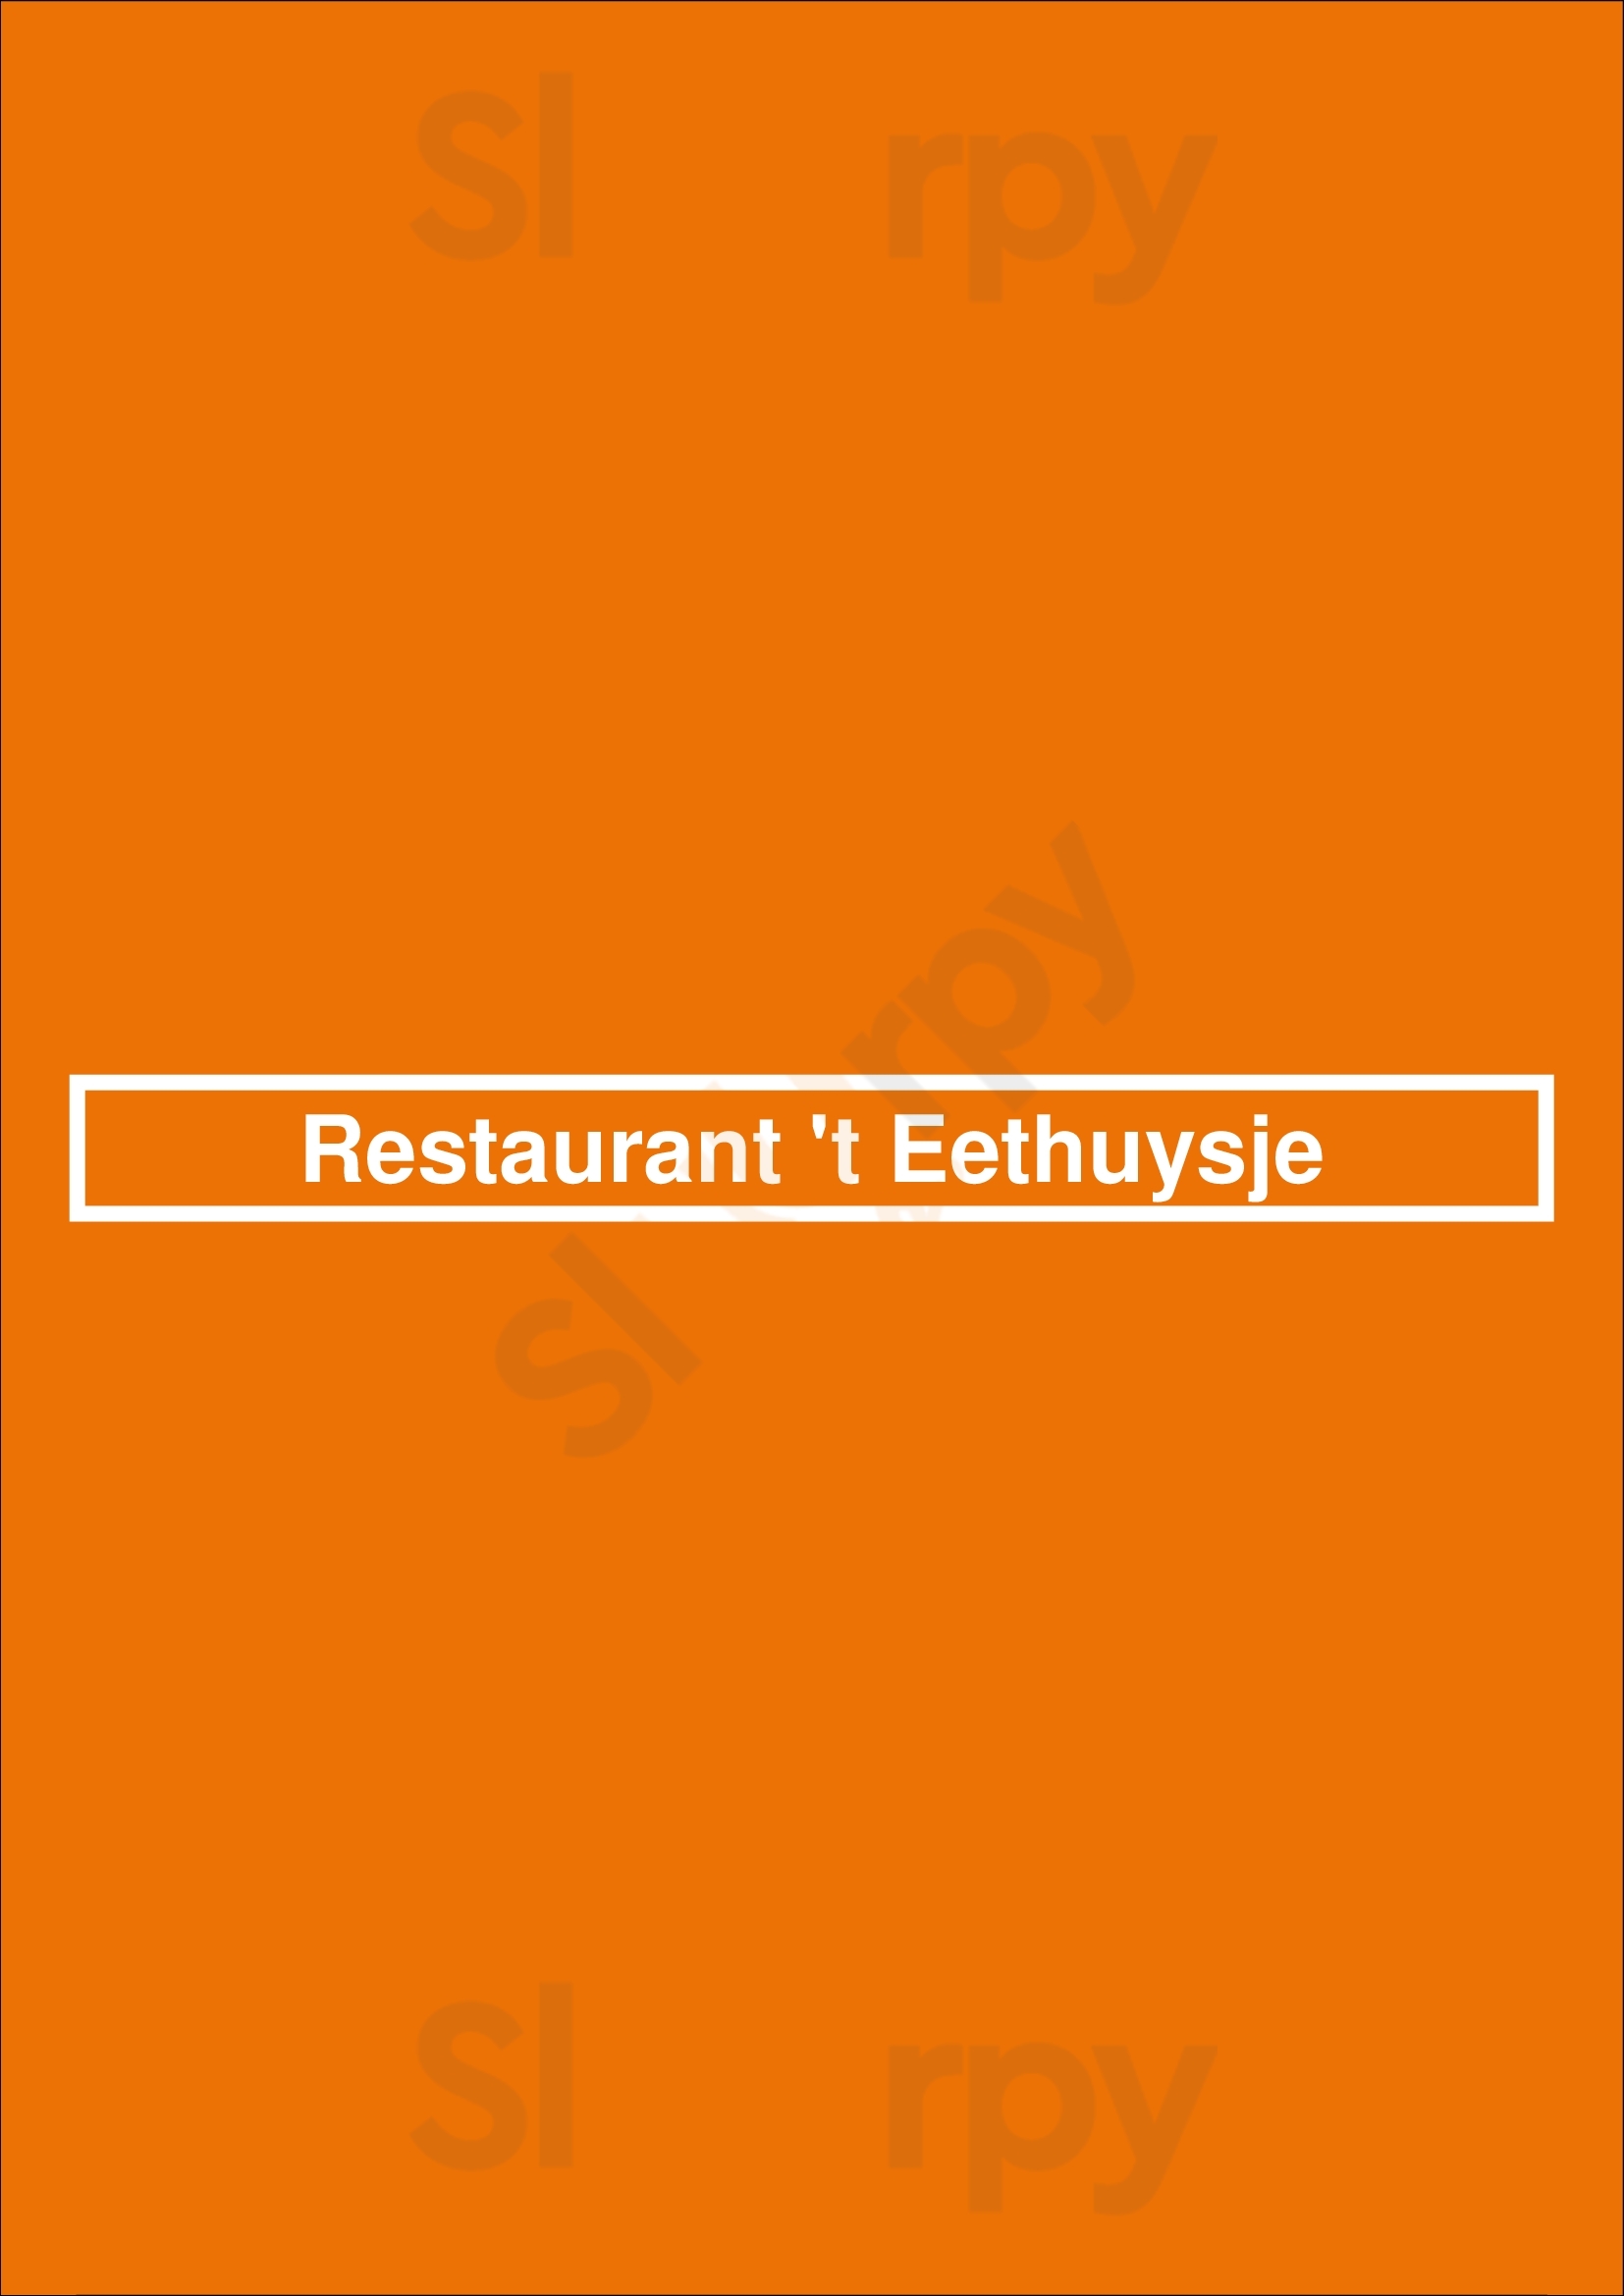 Restaurant 't Eethuysje Castricum Menu - 1